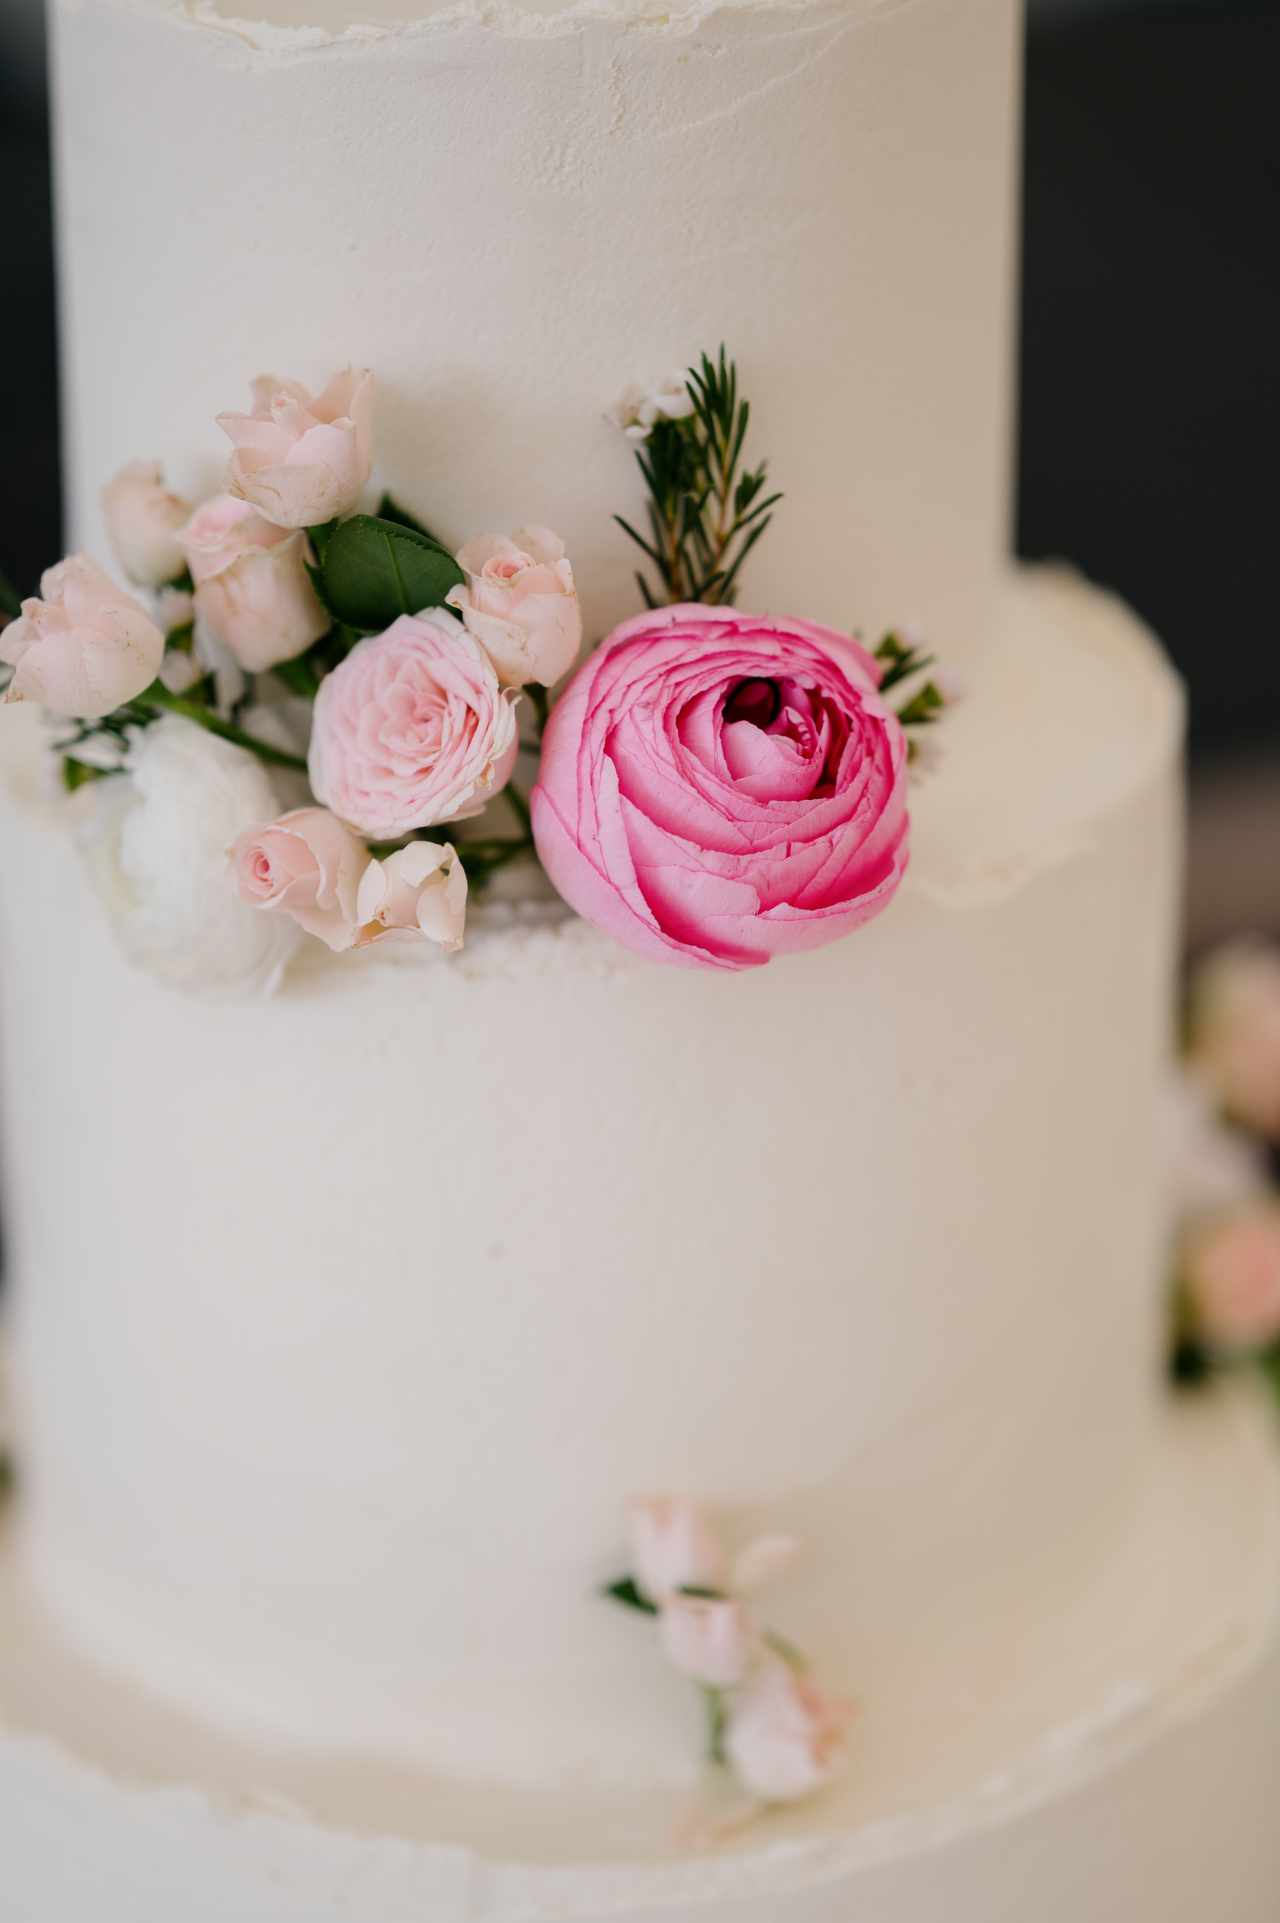 Stunning wedding cake with flower decorations